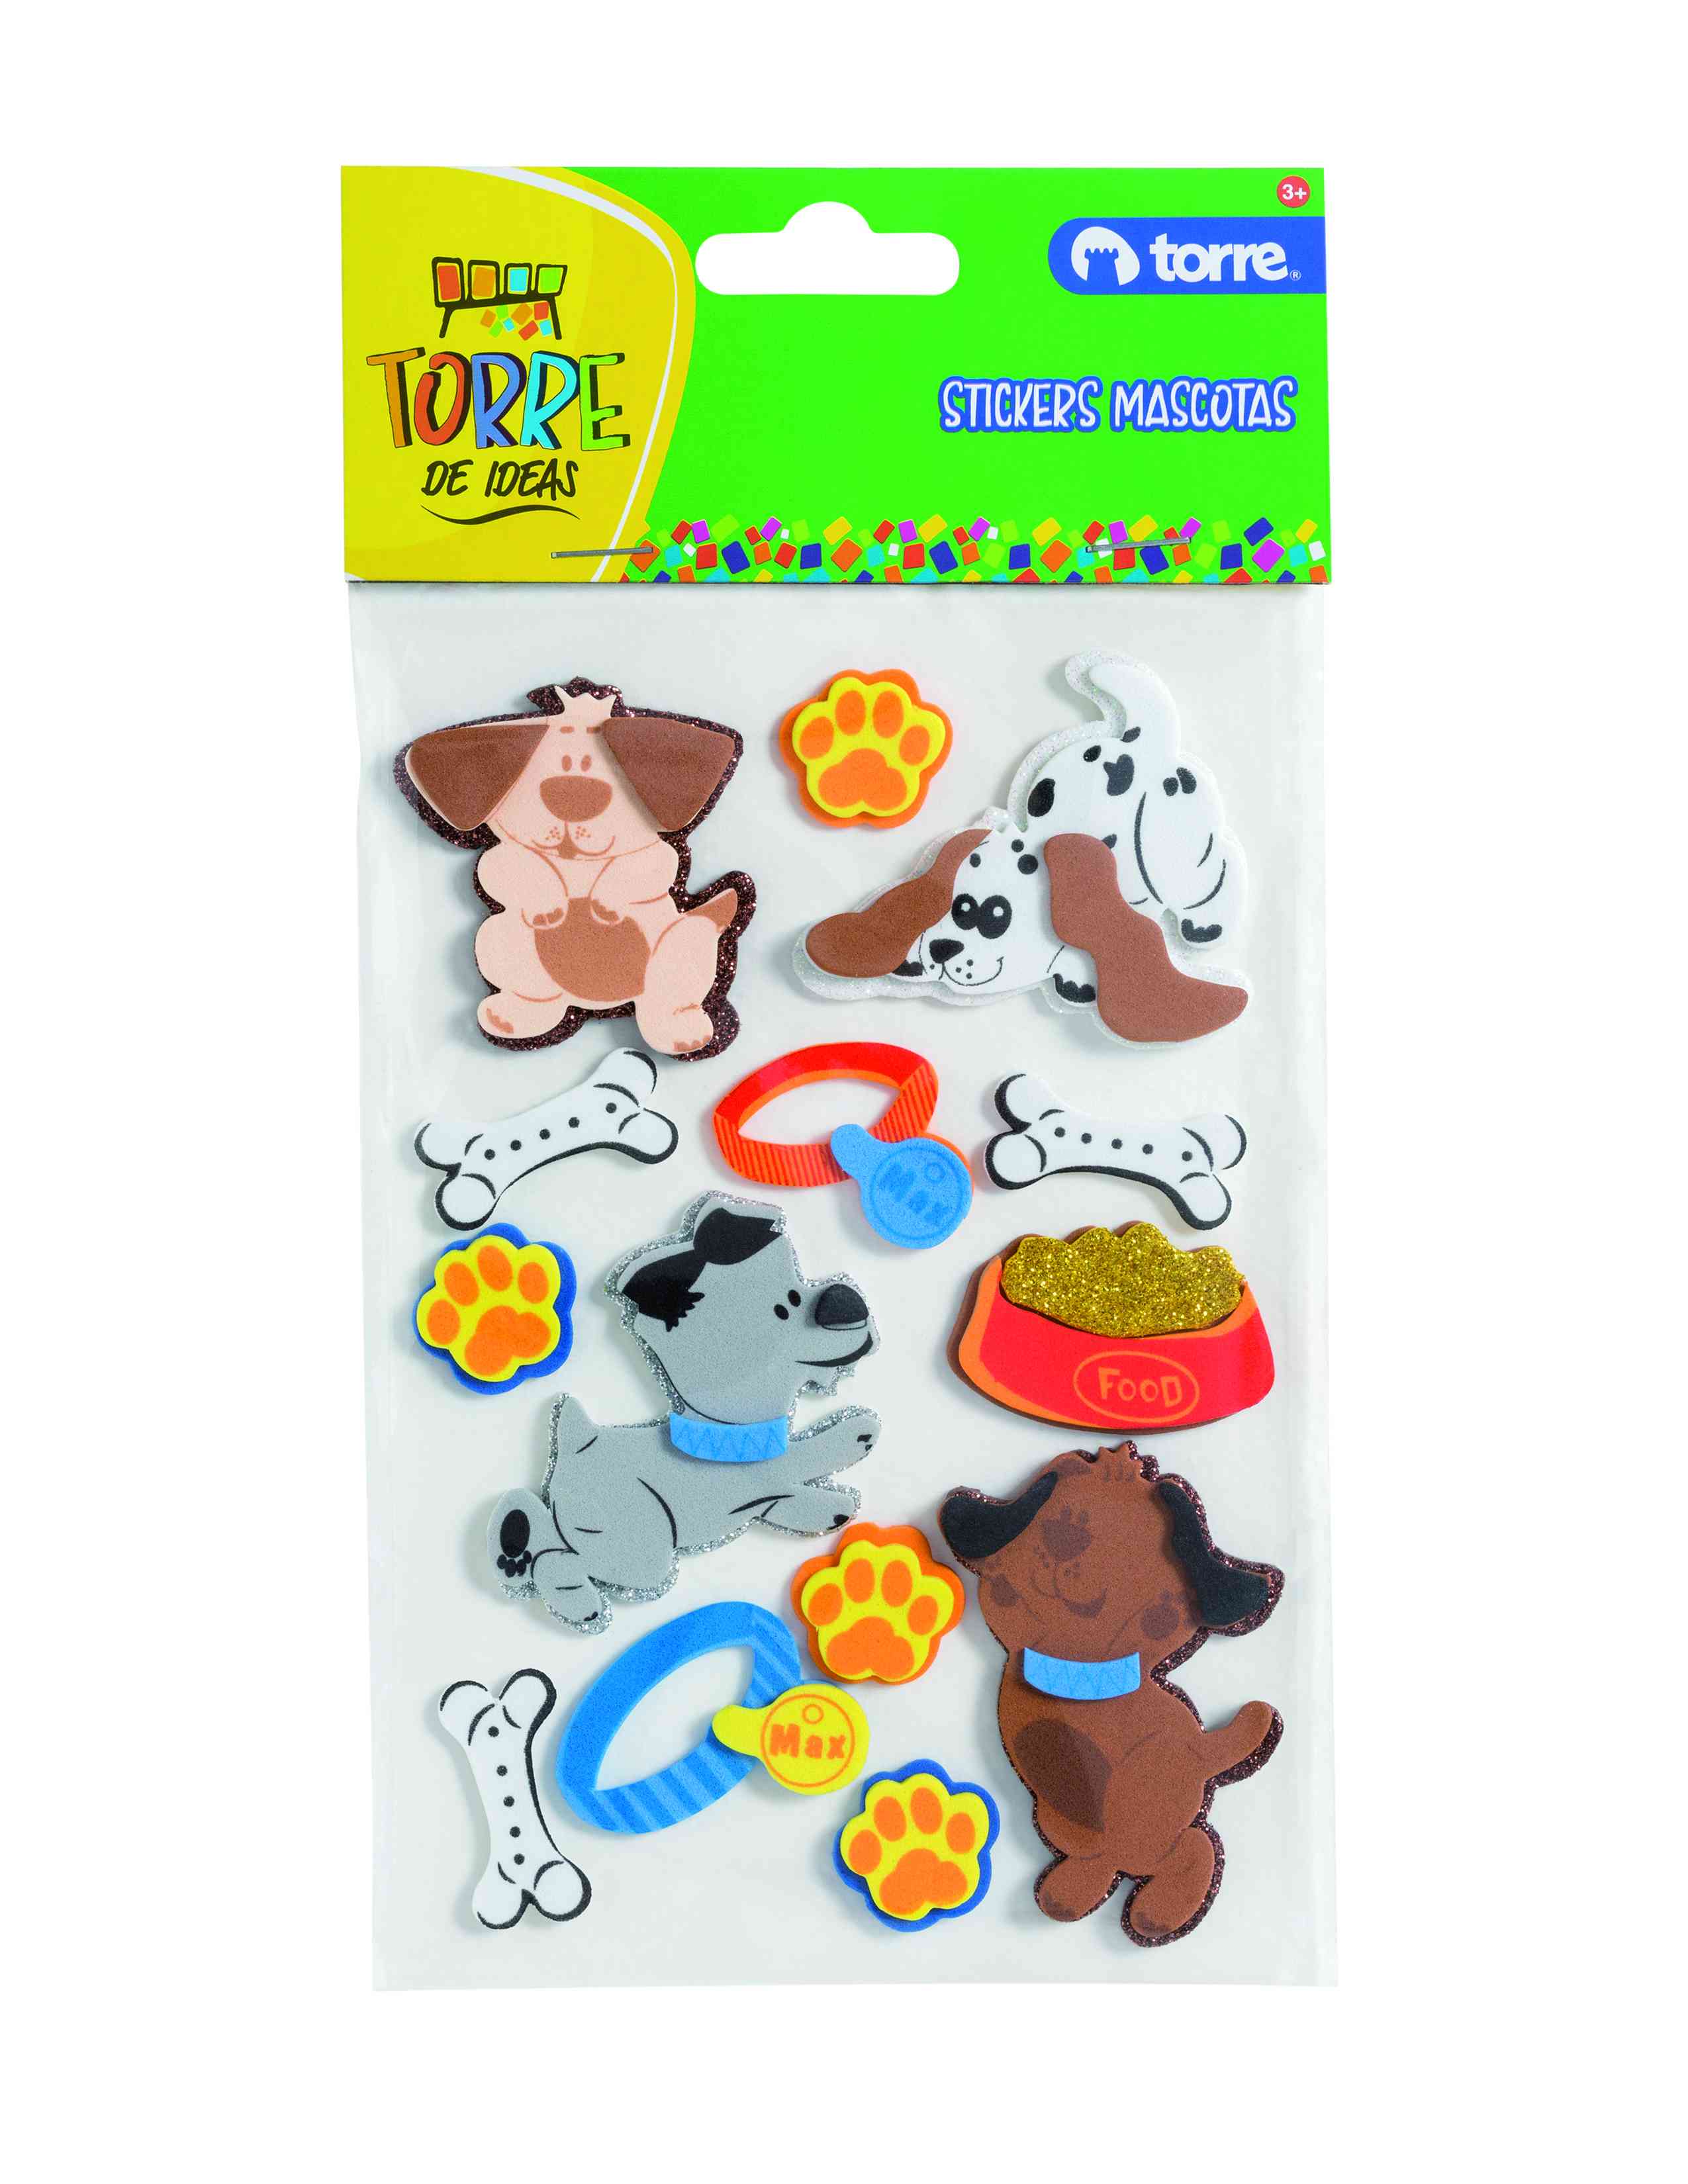 Stickers goma eva perros